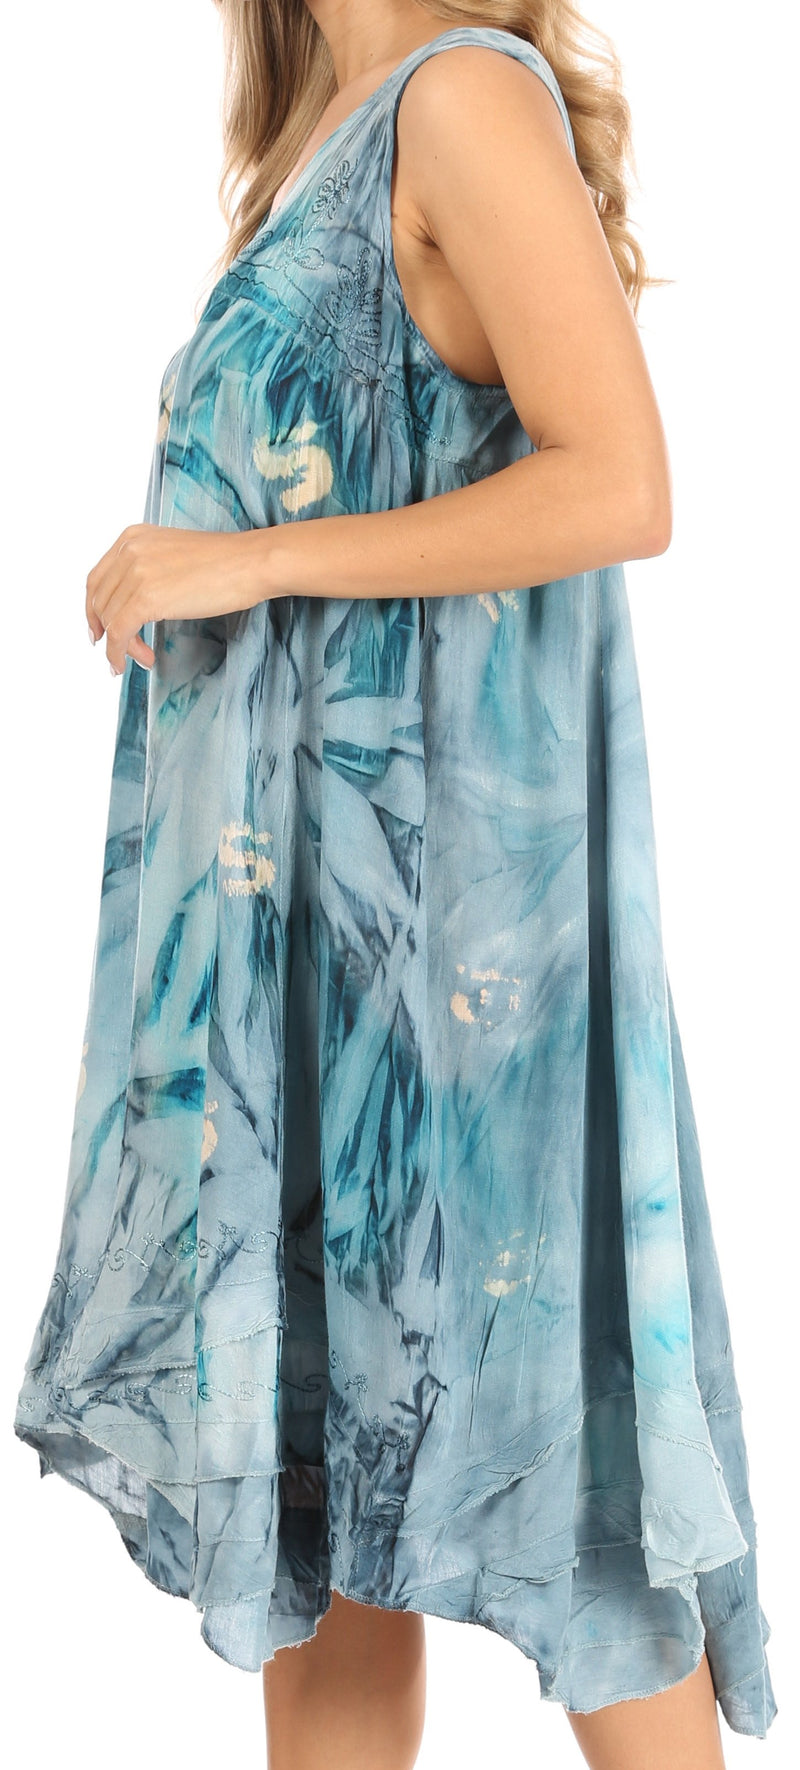 Sakkas Magy Women's Casual Summer Sleeveless Loose Tank Dress Tie-dye Floral Print